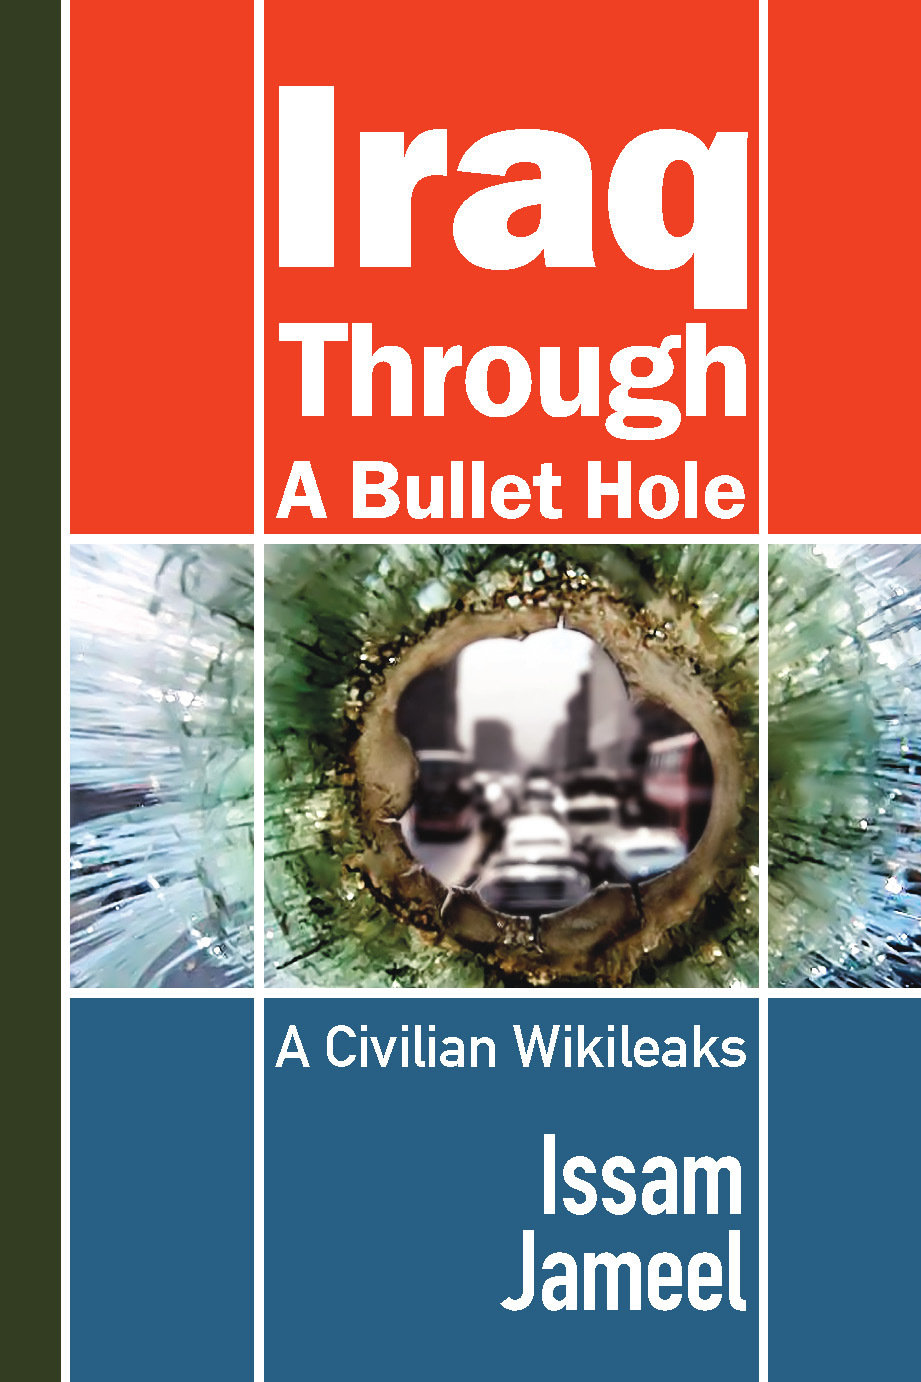 Iraq through a Bullet Hole: A Civilian Wikileaks